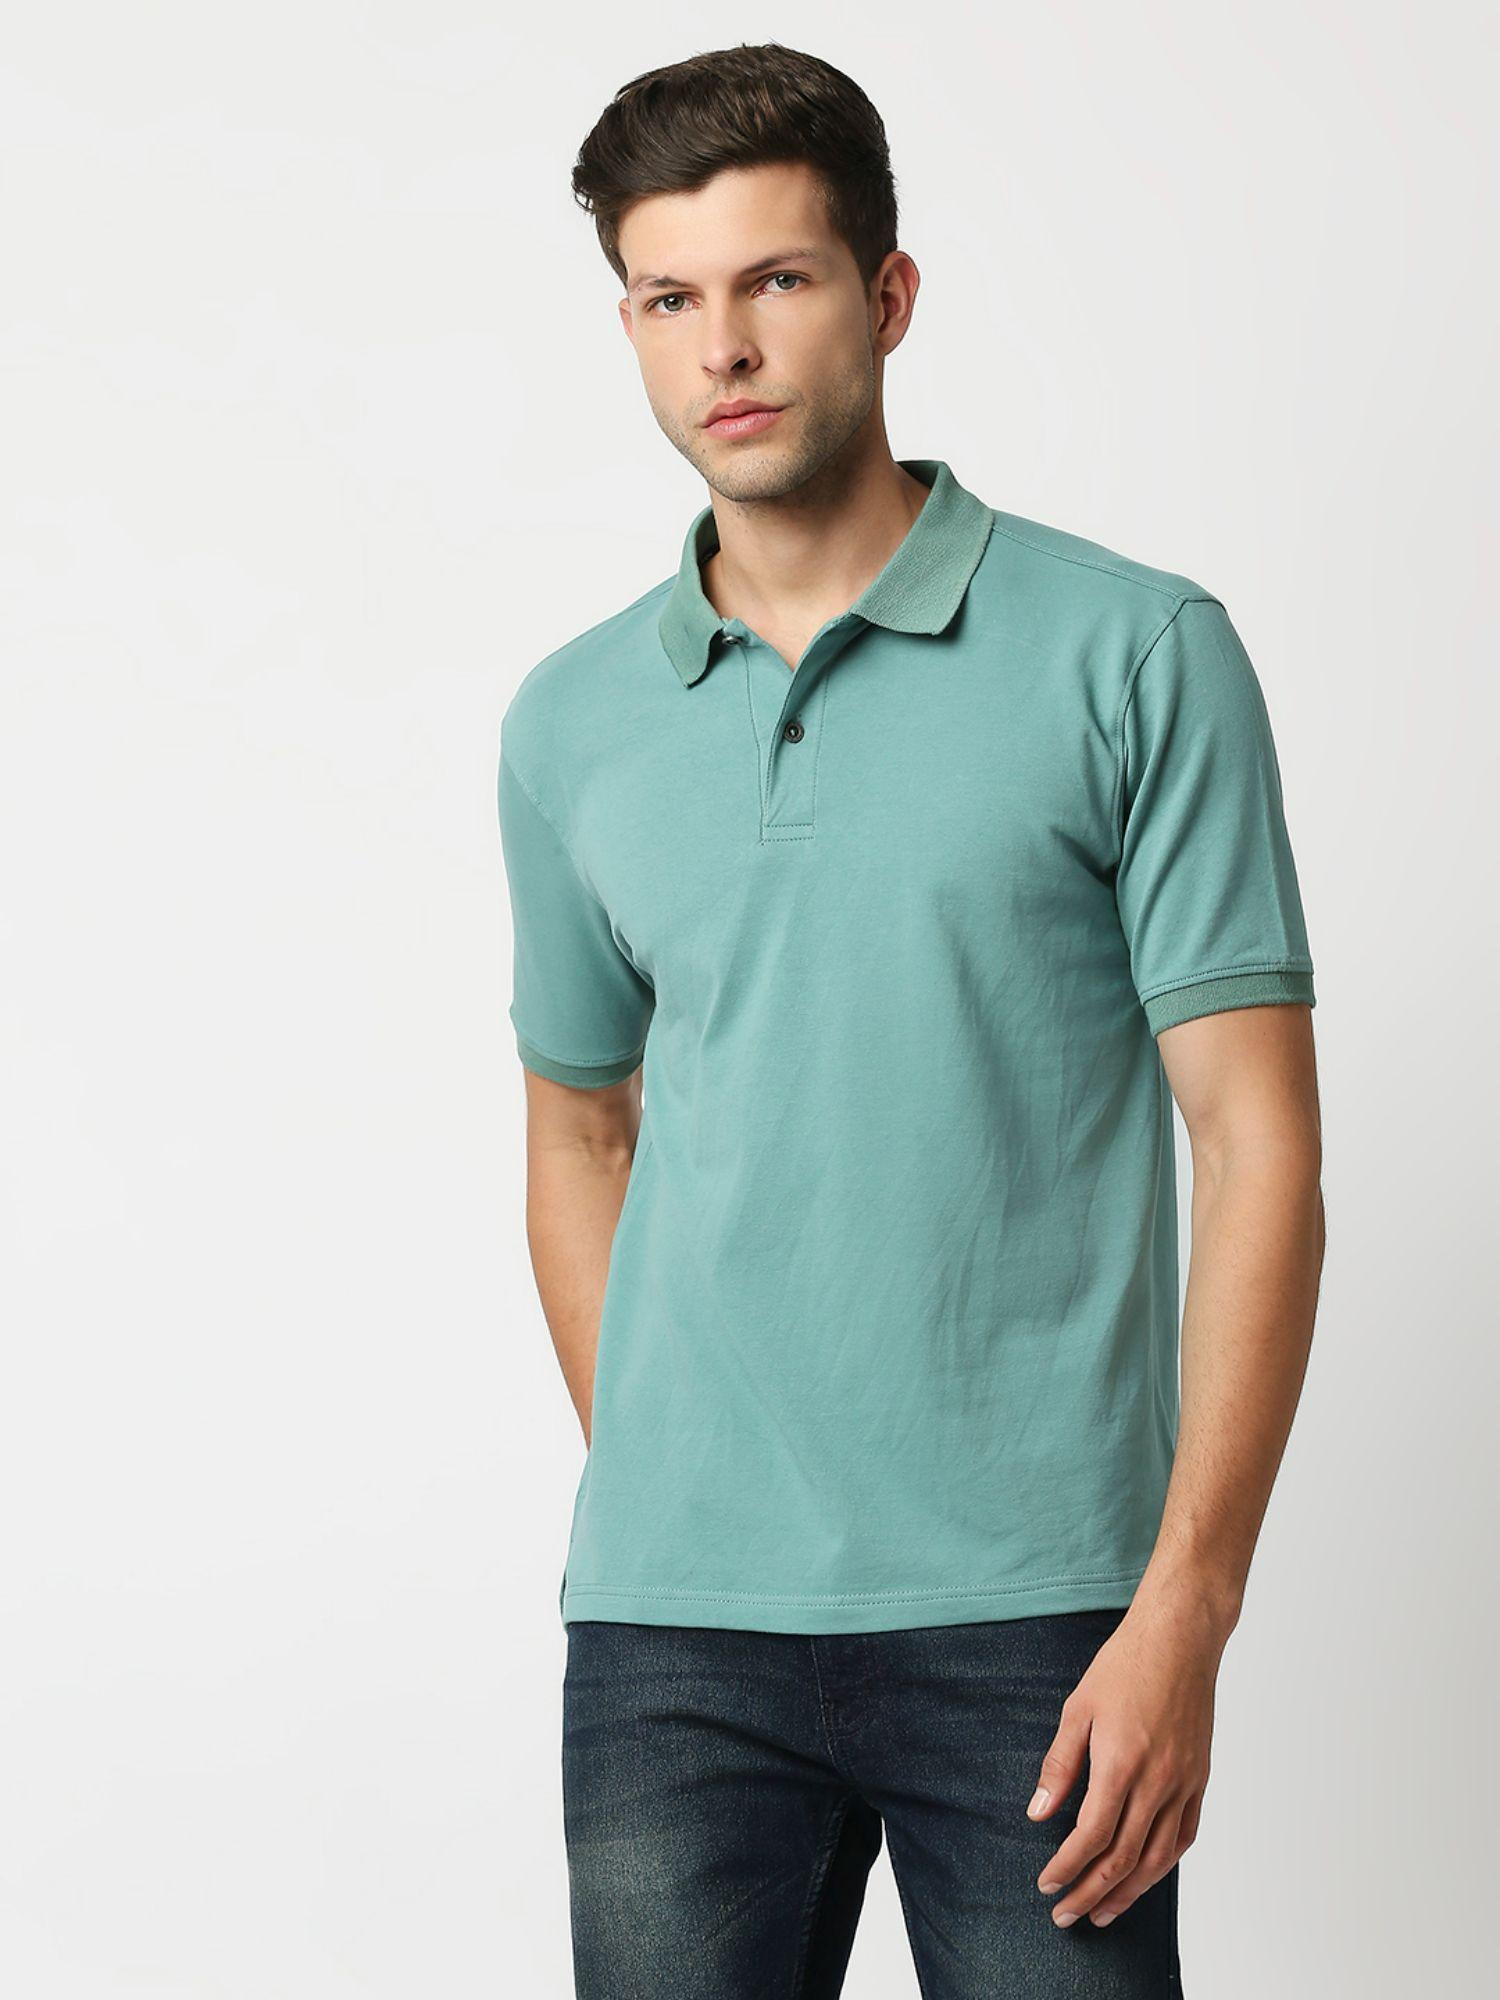 mens-polo-plain-green-color-t-shirt